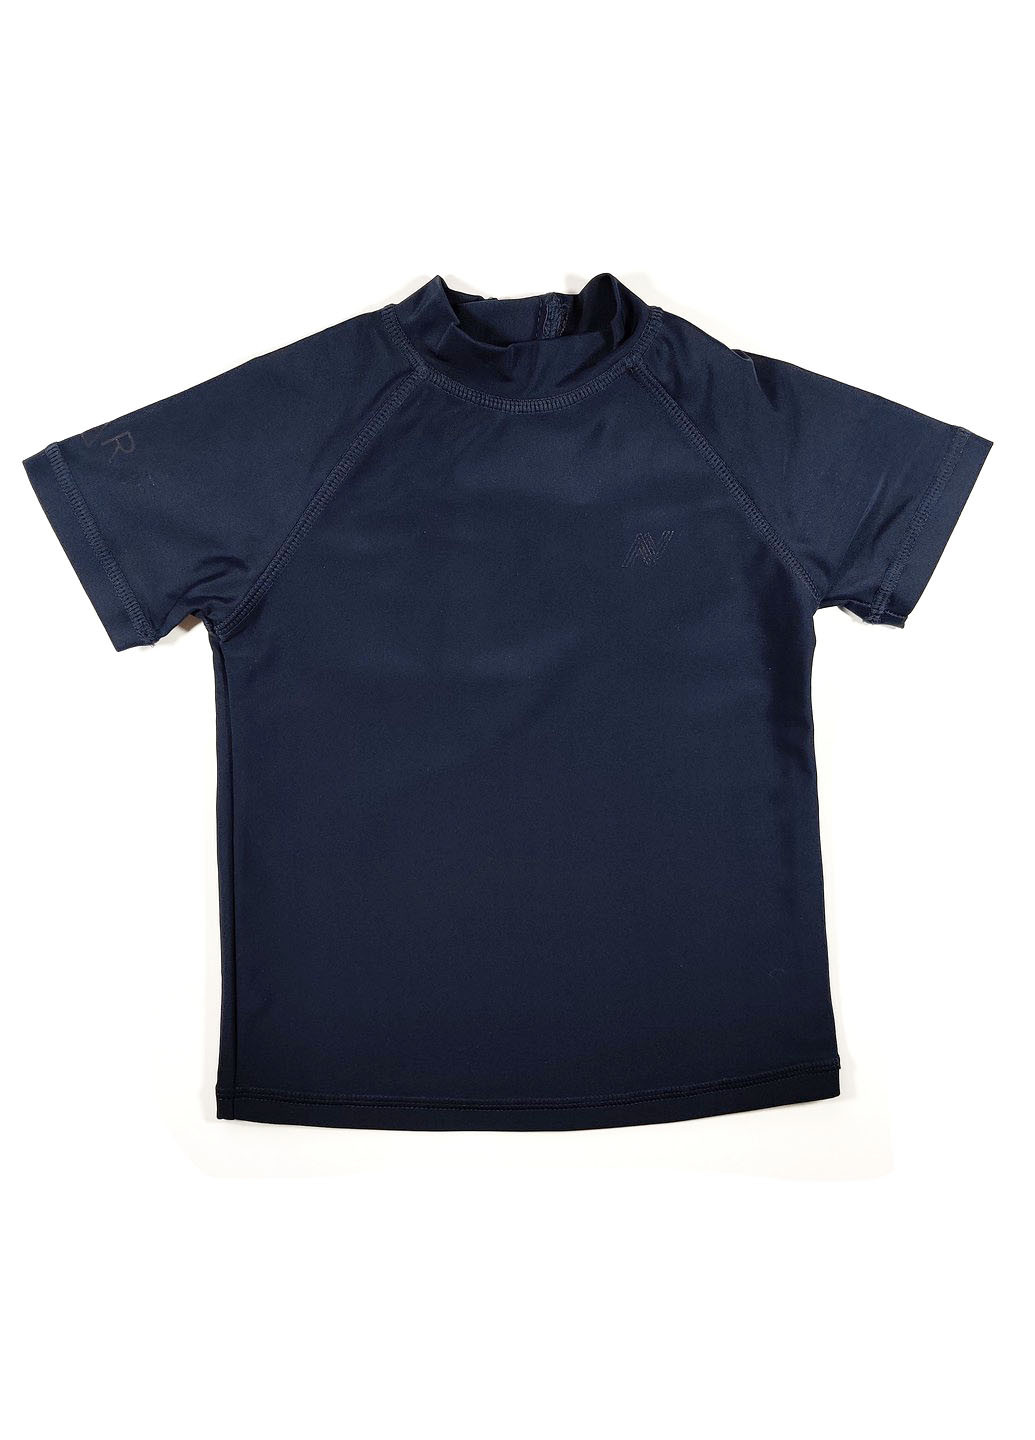 Темно-синяя летняя футболка для купания Next Baby